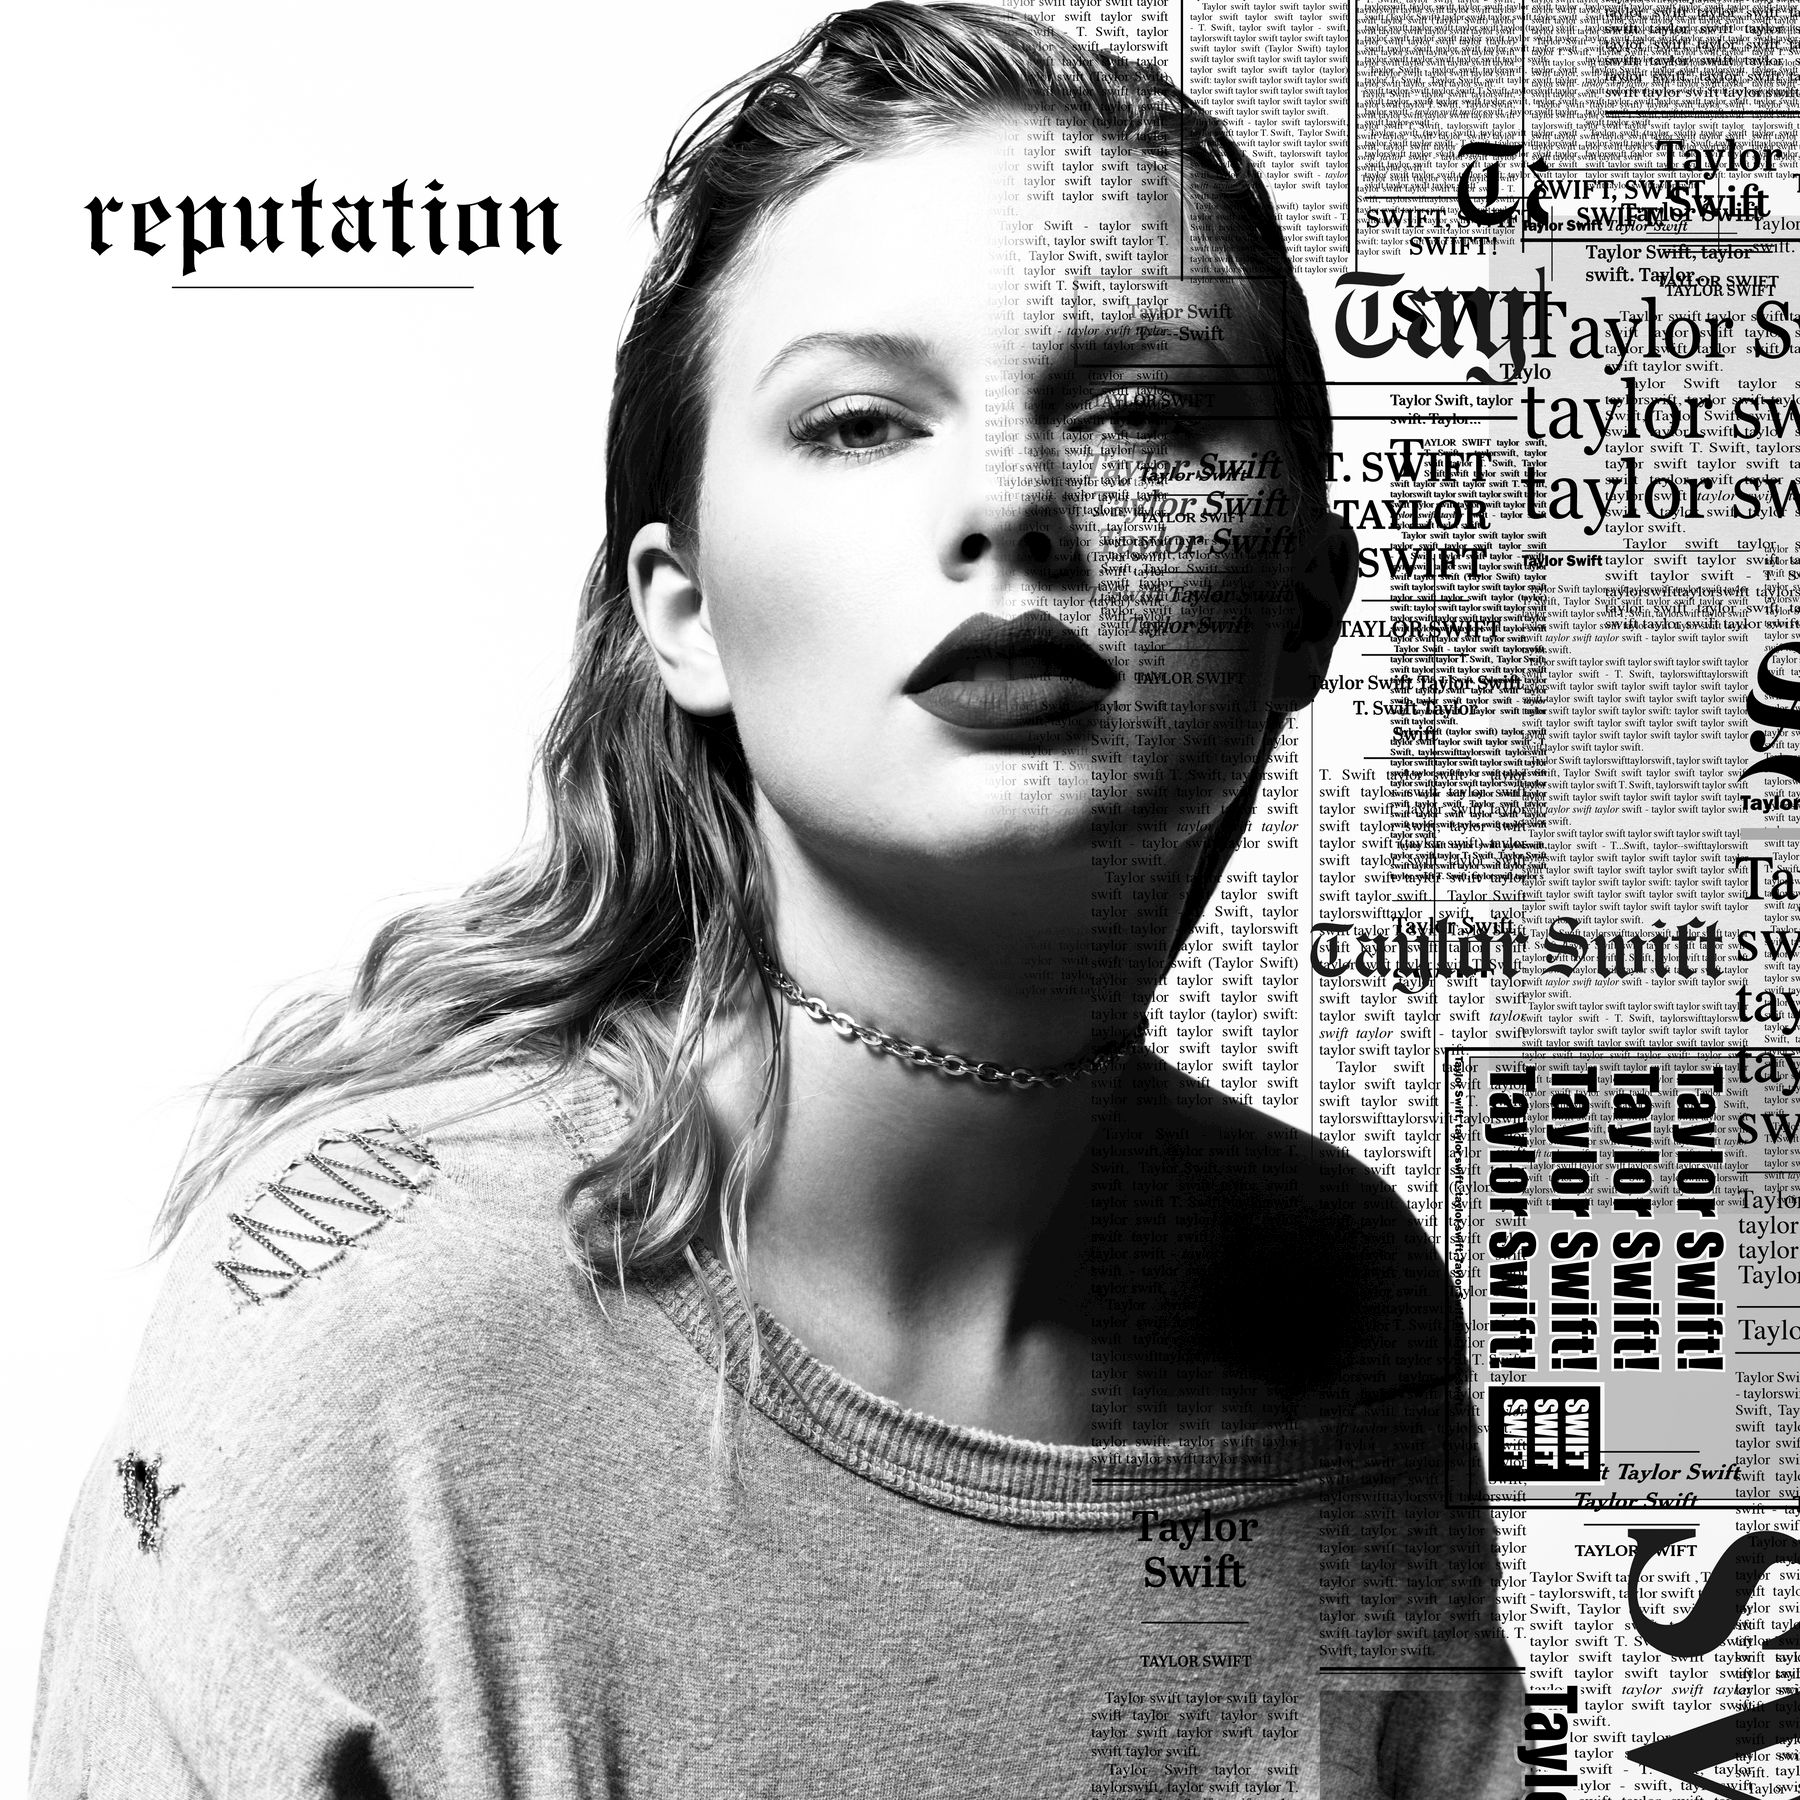 Taylor Swift - Reputation - Album Cover